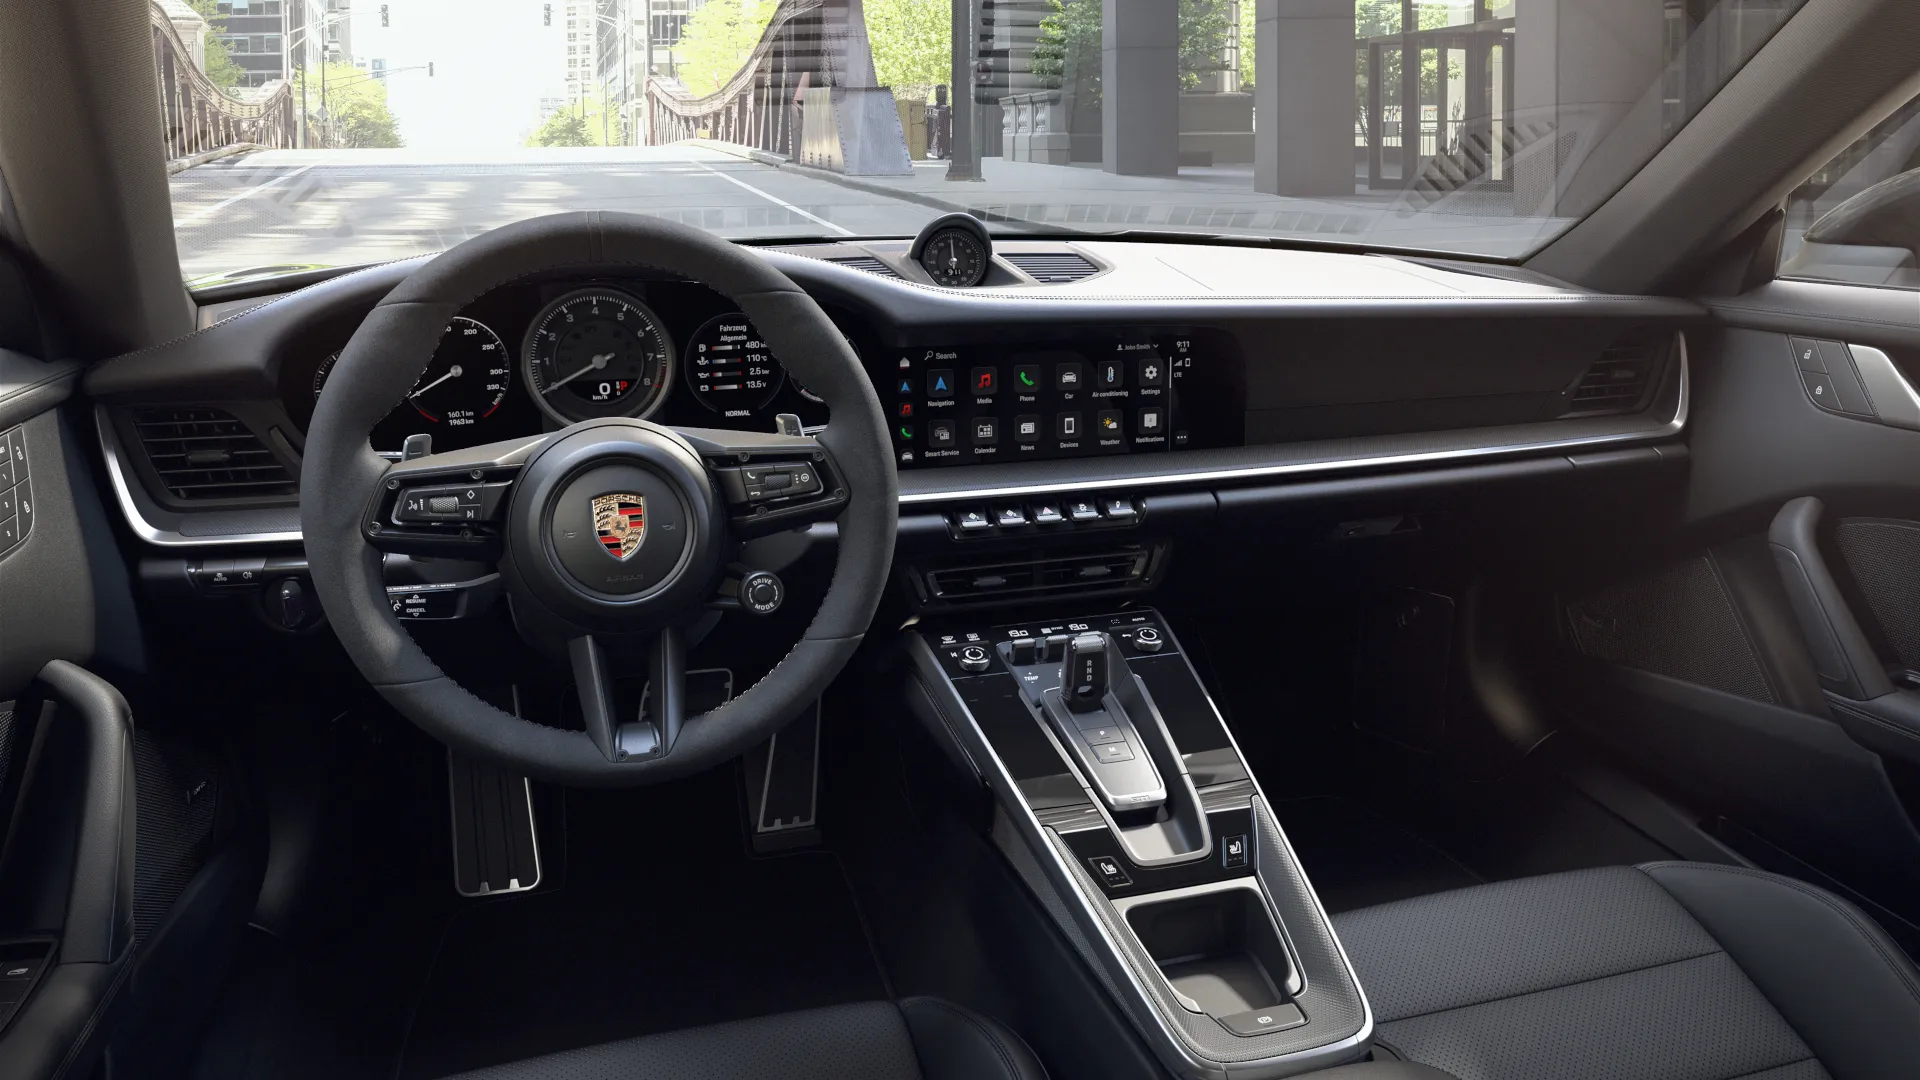 Vue intérieure du 911 Carrera